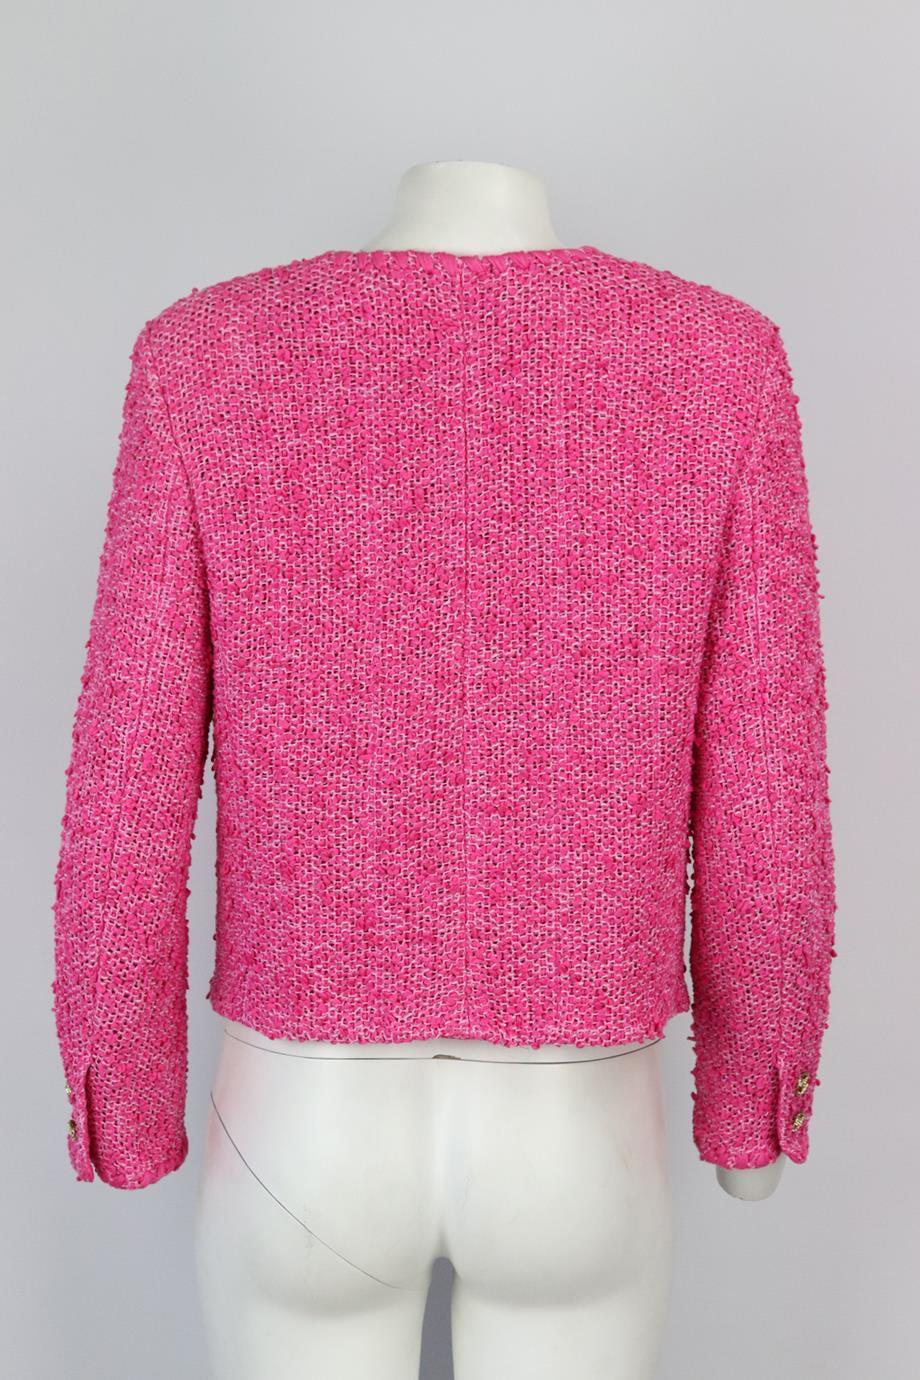 Women's Chanel 2021 Cotton Blend Tweed Jacket Fr 42 Uk 14